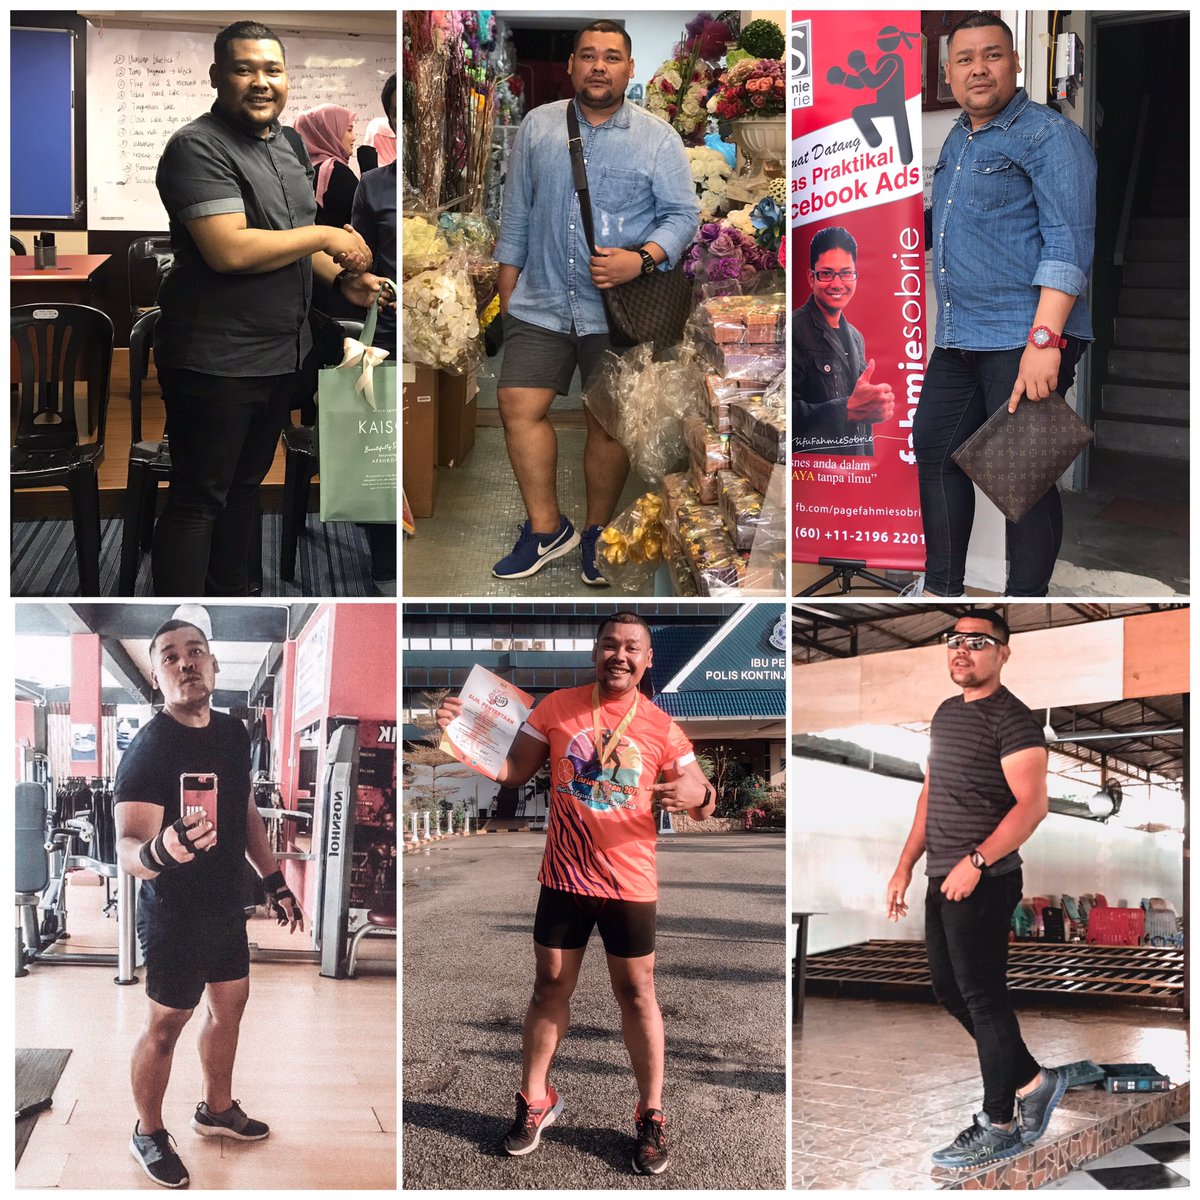 Days 243 & keep counting...thank fams & frens #weightloss #weightlossjourney #weightlosstransformation #roadtoidealweight #bodygoals #perfectweight #obesetofit #bodytransformation #healthylifestyle #asia #malaysia #discipline